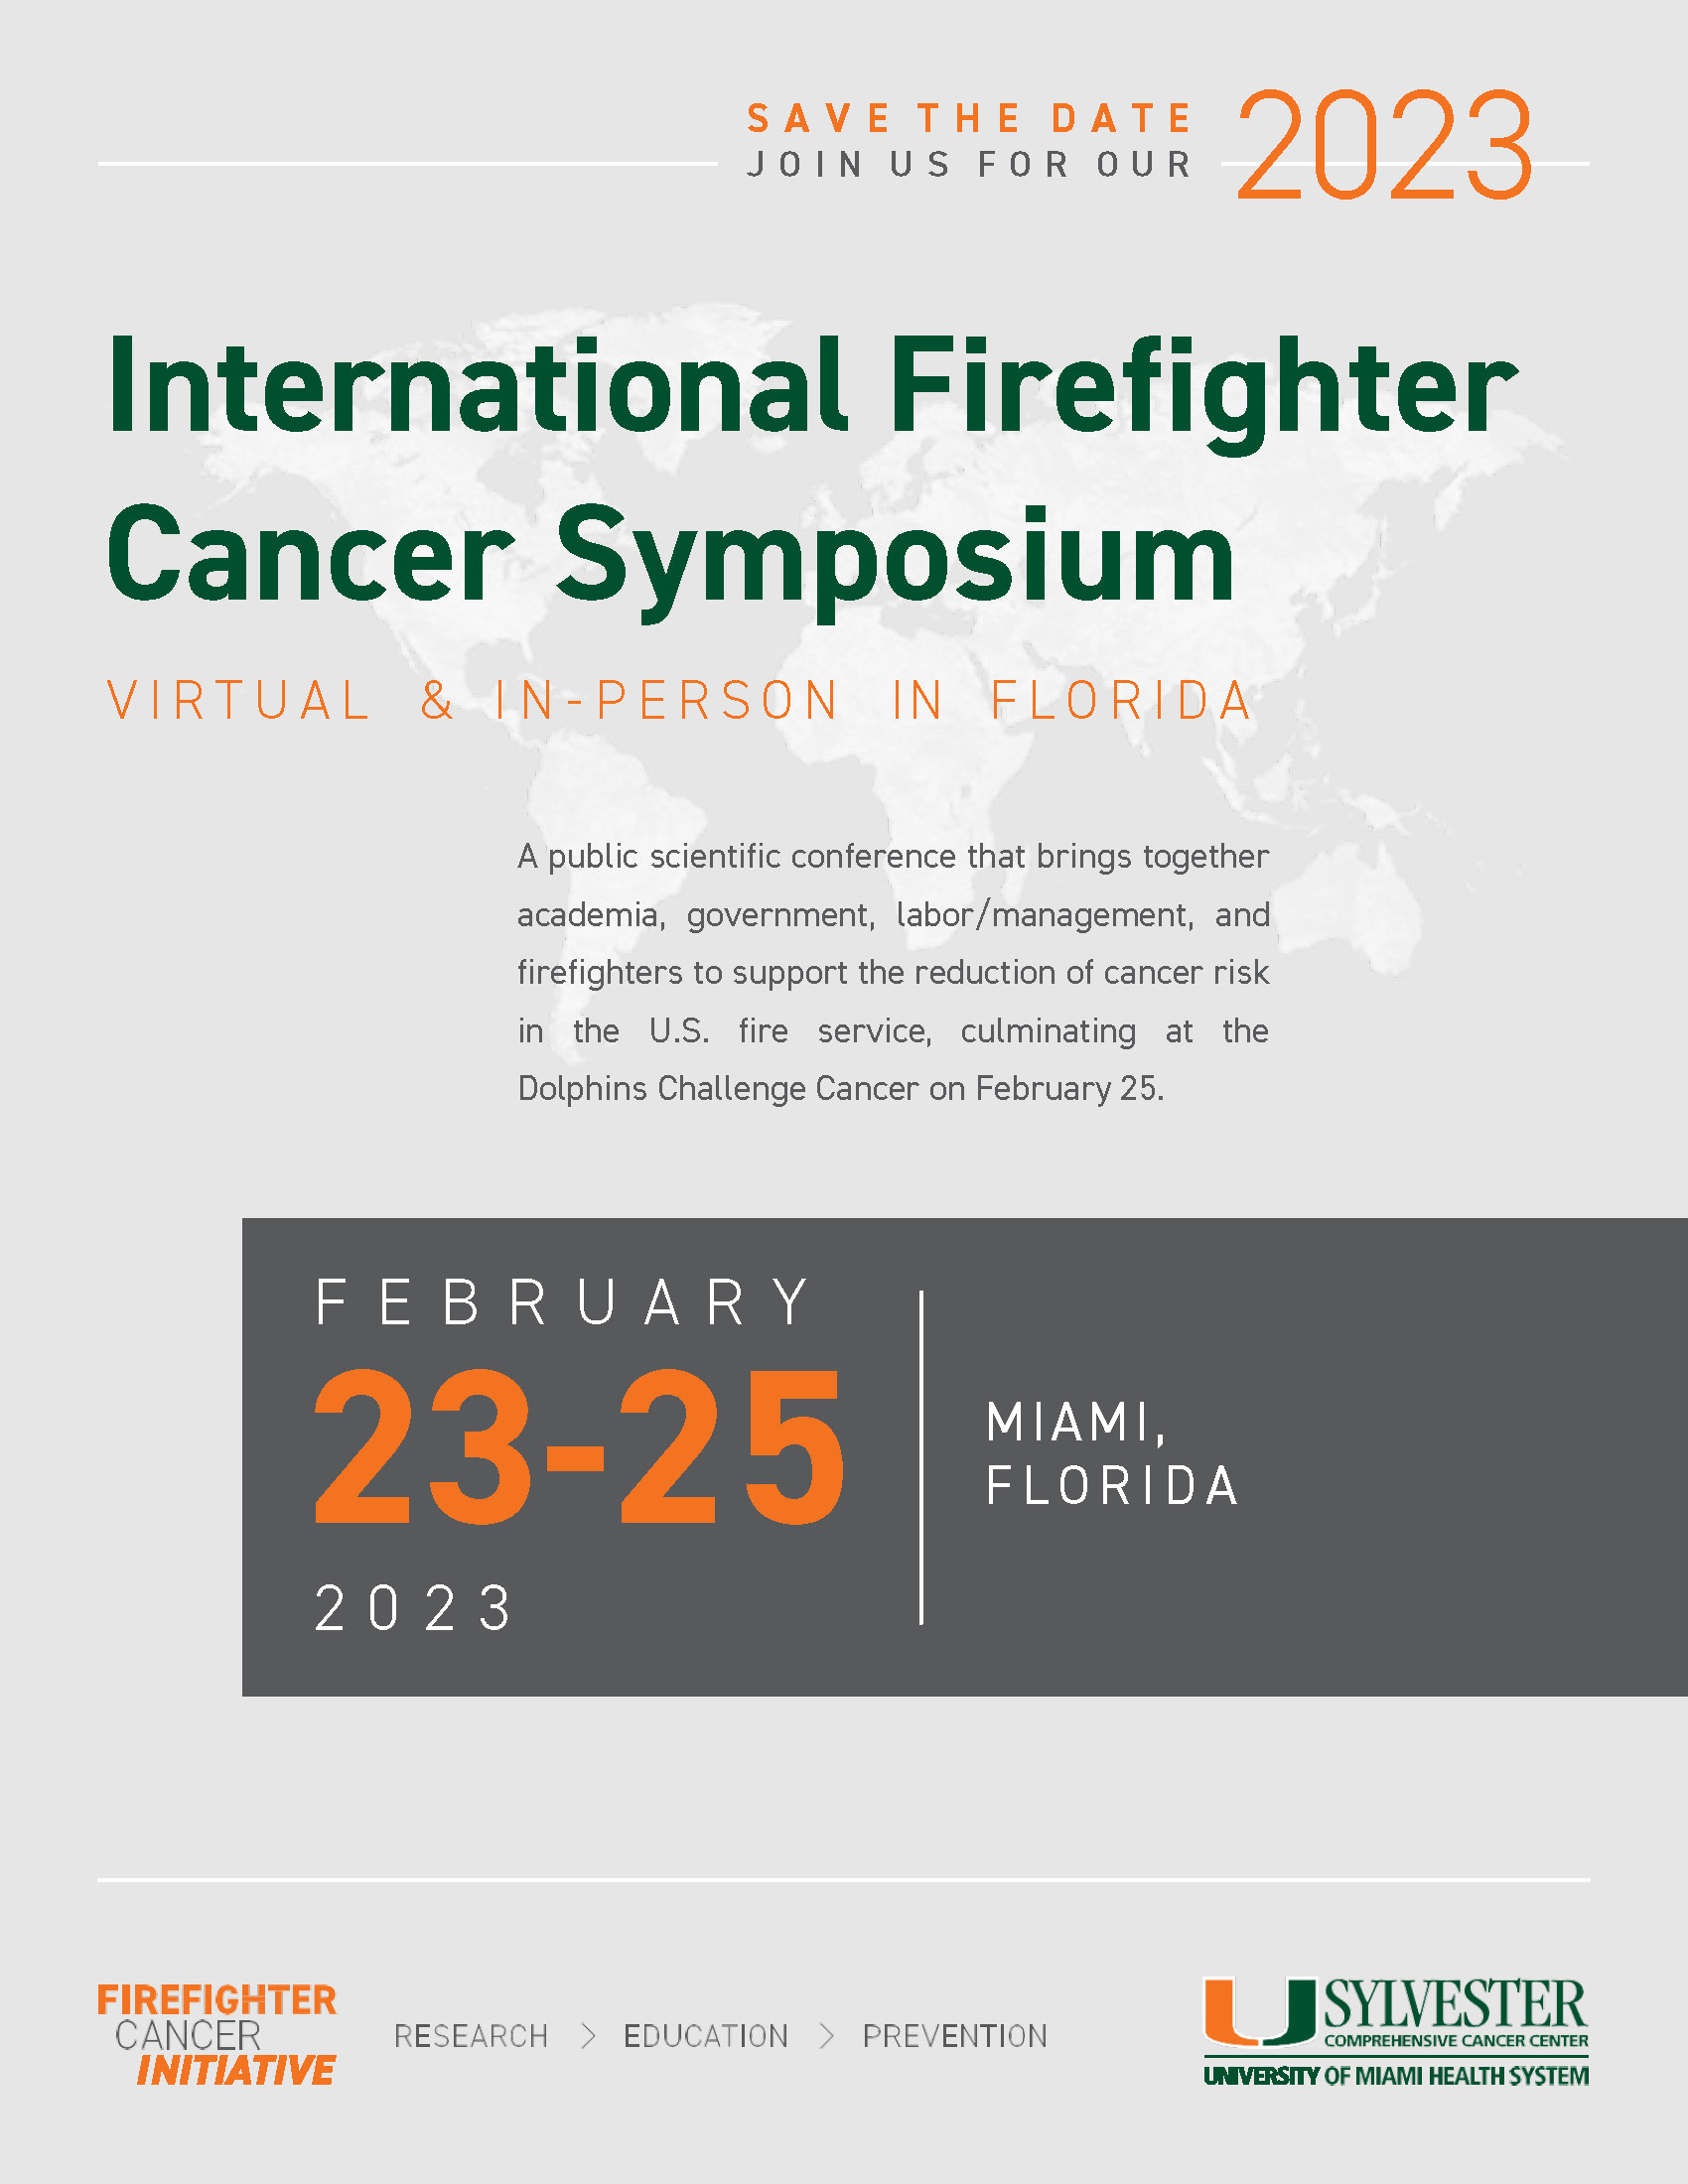 Save the Date for the 2023 International Firefighter Cancer Symposium - Sylvester Comprehensive Cancer Center